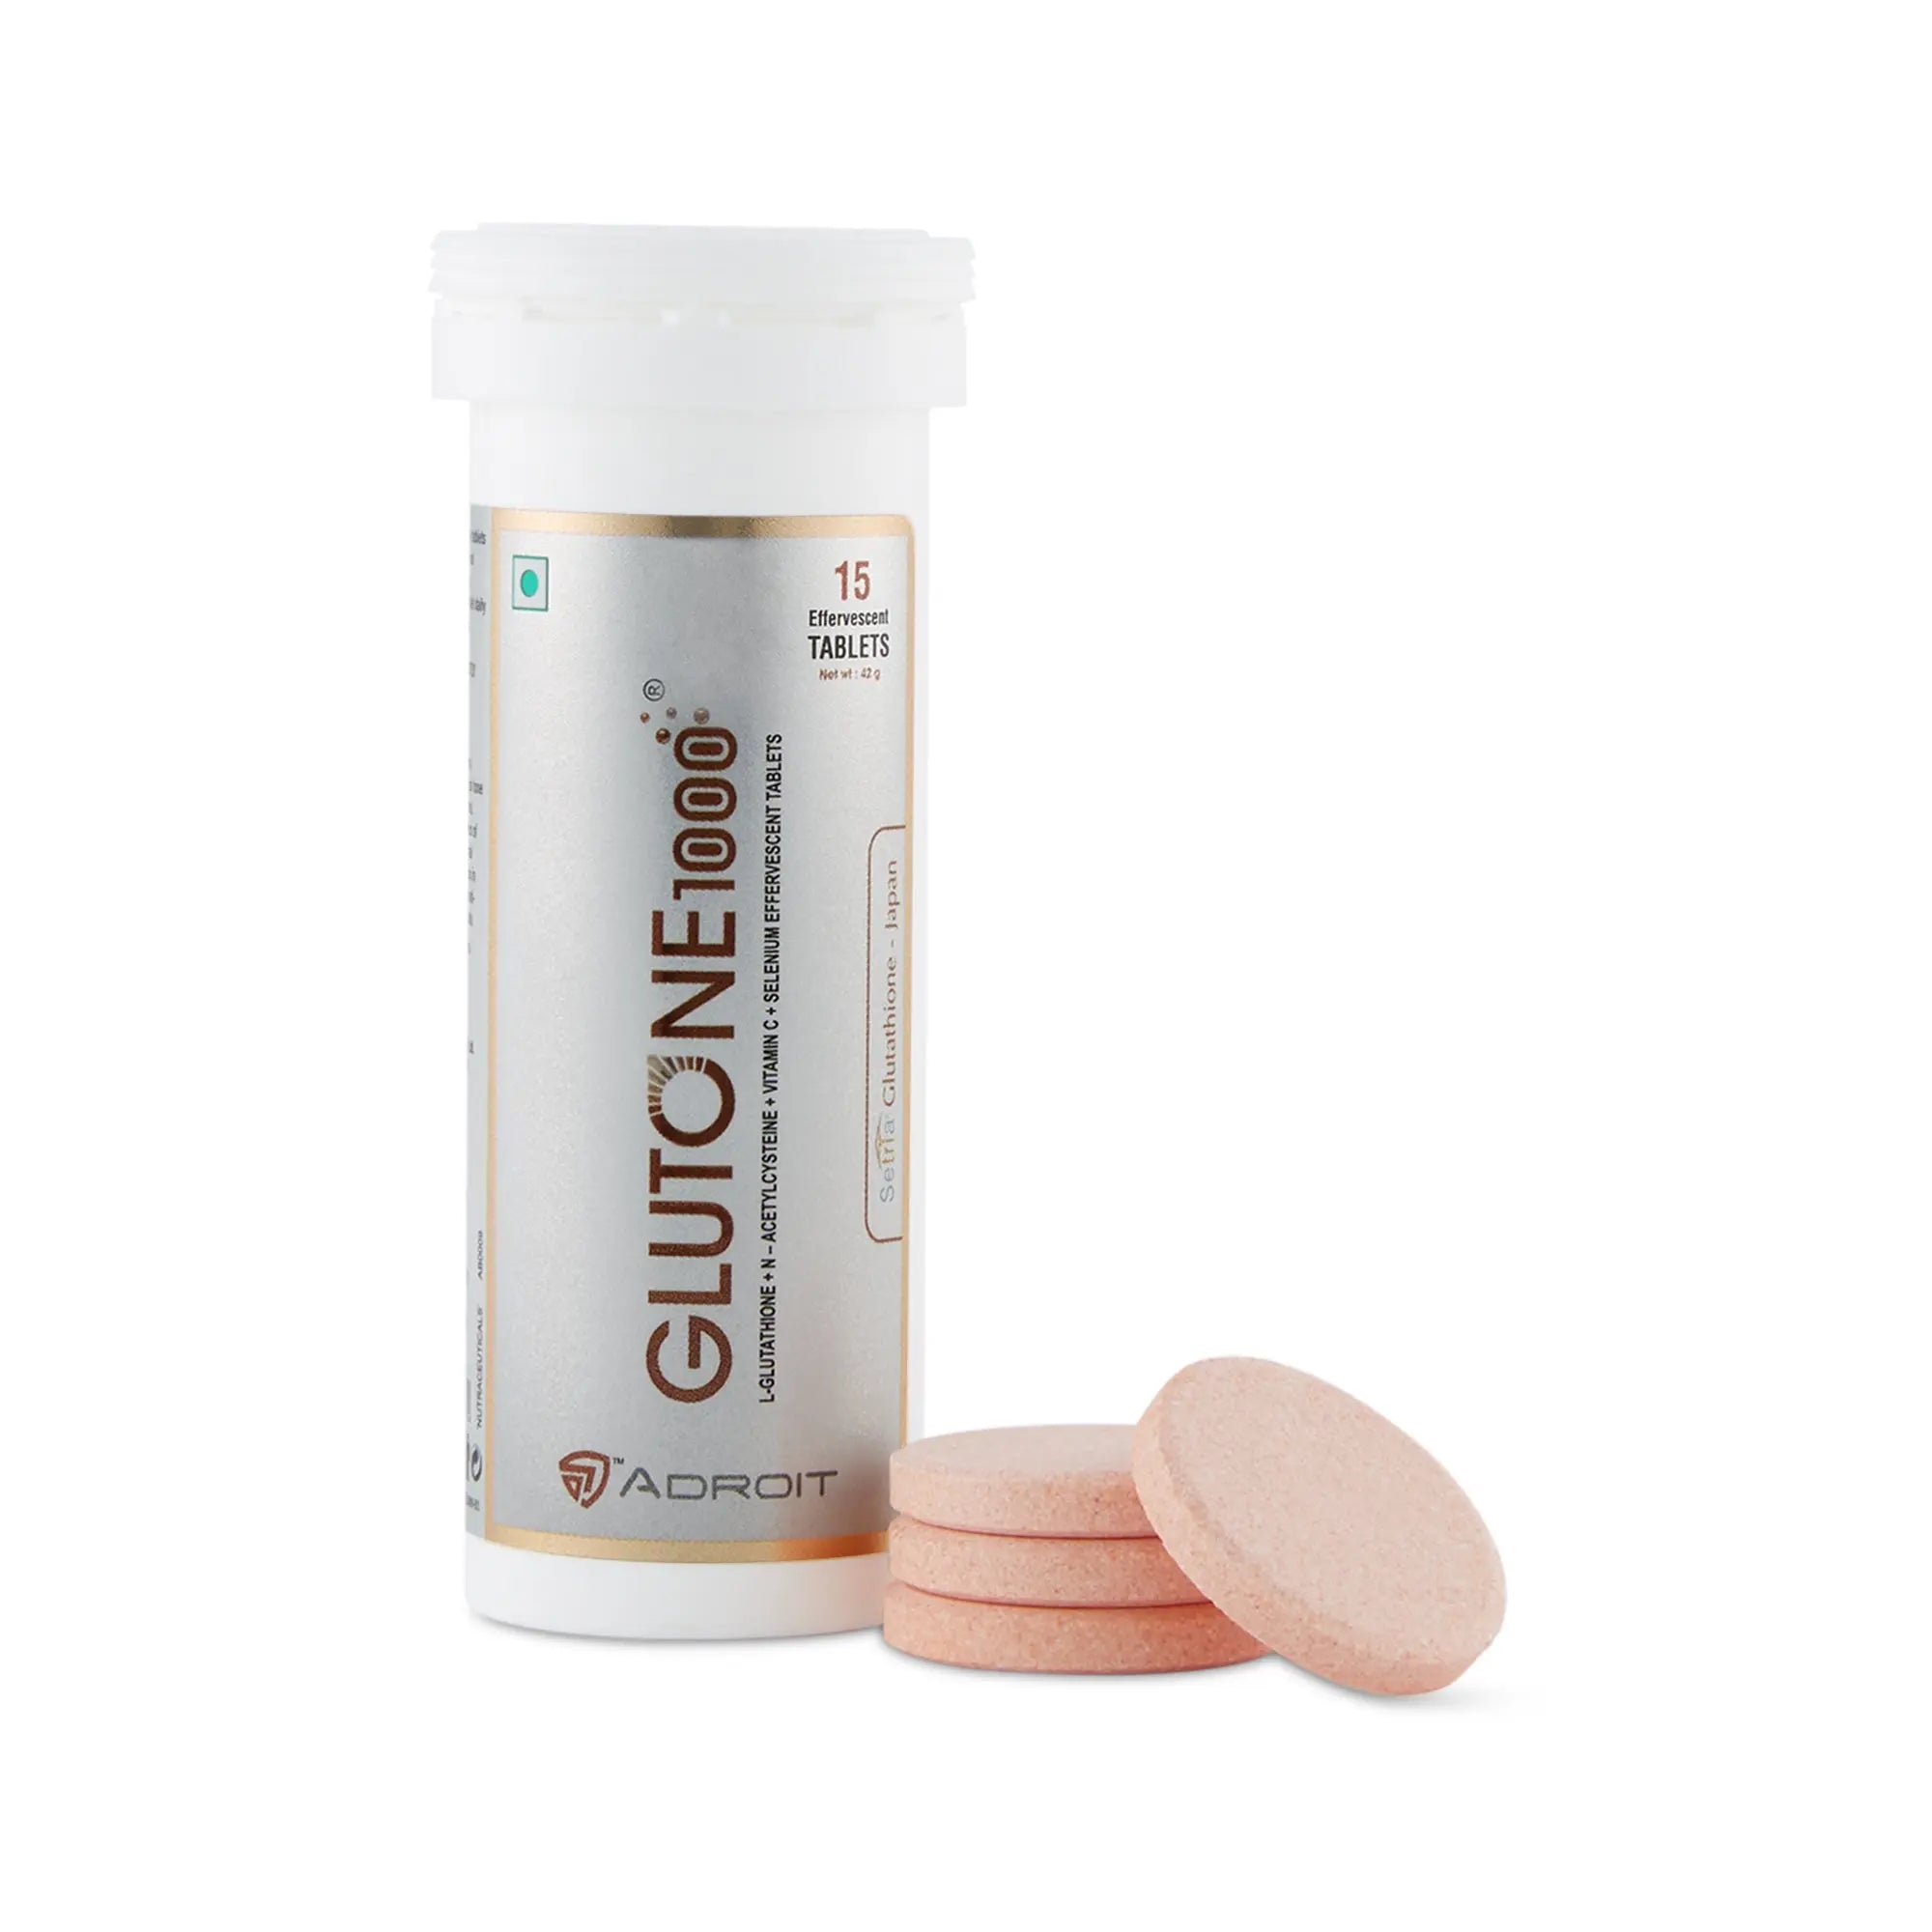 Glutone 1000 - Setria L-Glutathione & Vitamin C Effervescent Tablets I Skin Glow and Radiance I Even Skin Tone I 15 Tablets